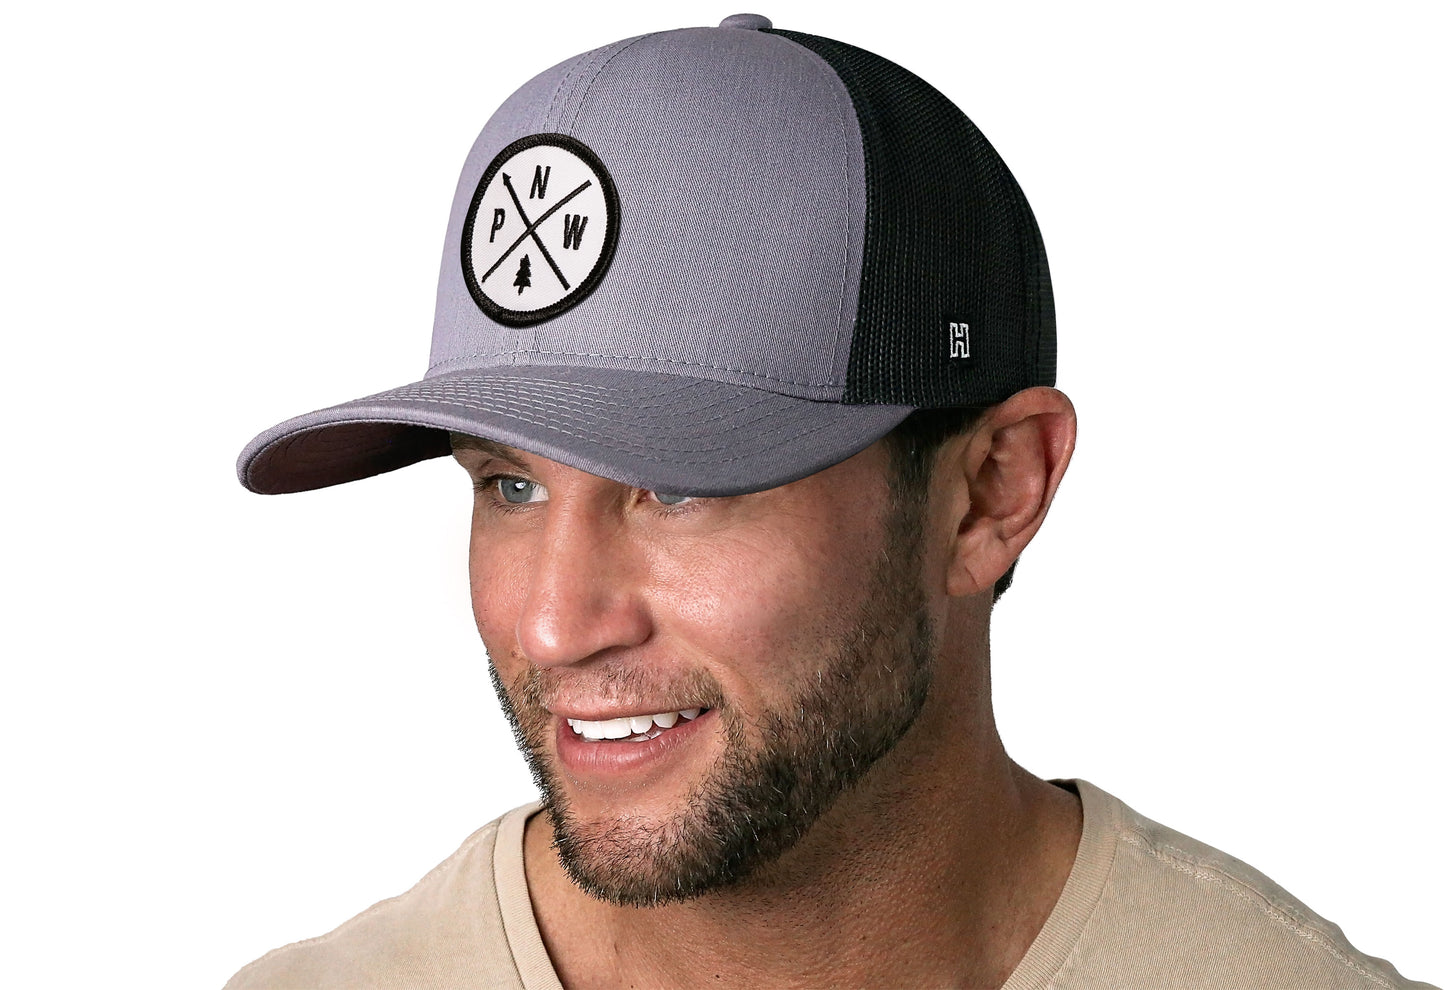 PNW Trucker Hat  |  Gray Black Pacific Northwest Snapback